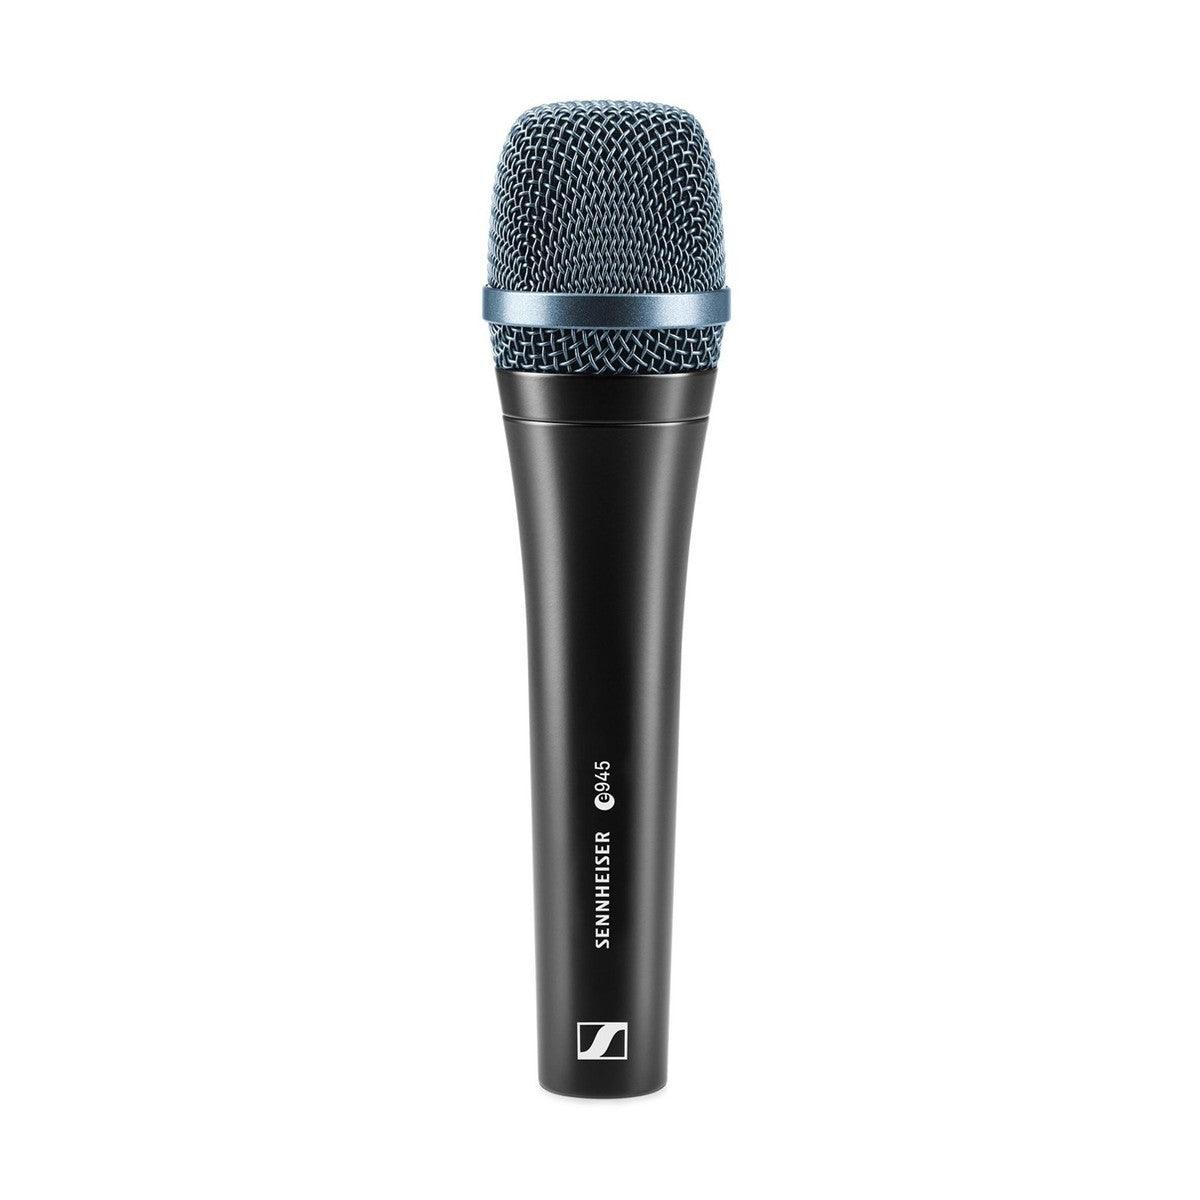 Sennheiser e945 Dynamic Vocal Microphone - DY Pro Audio